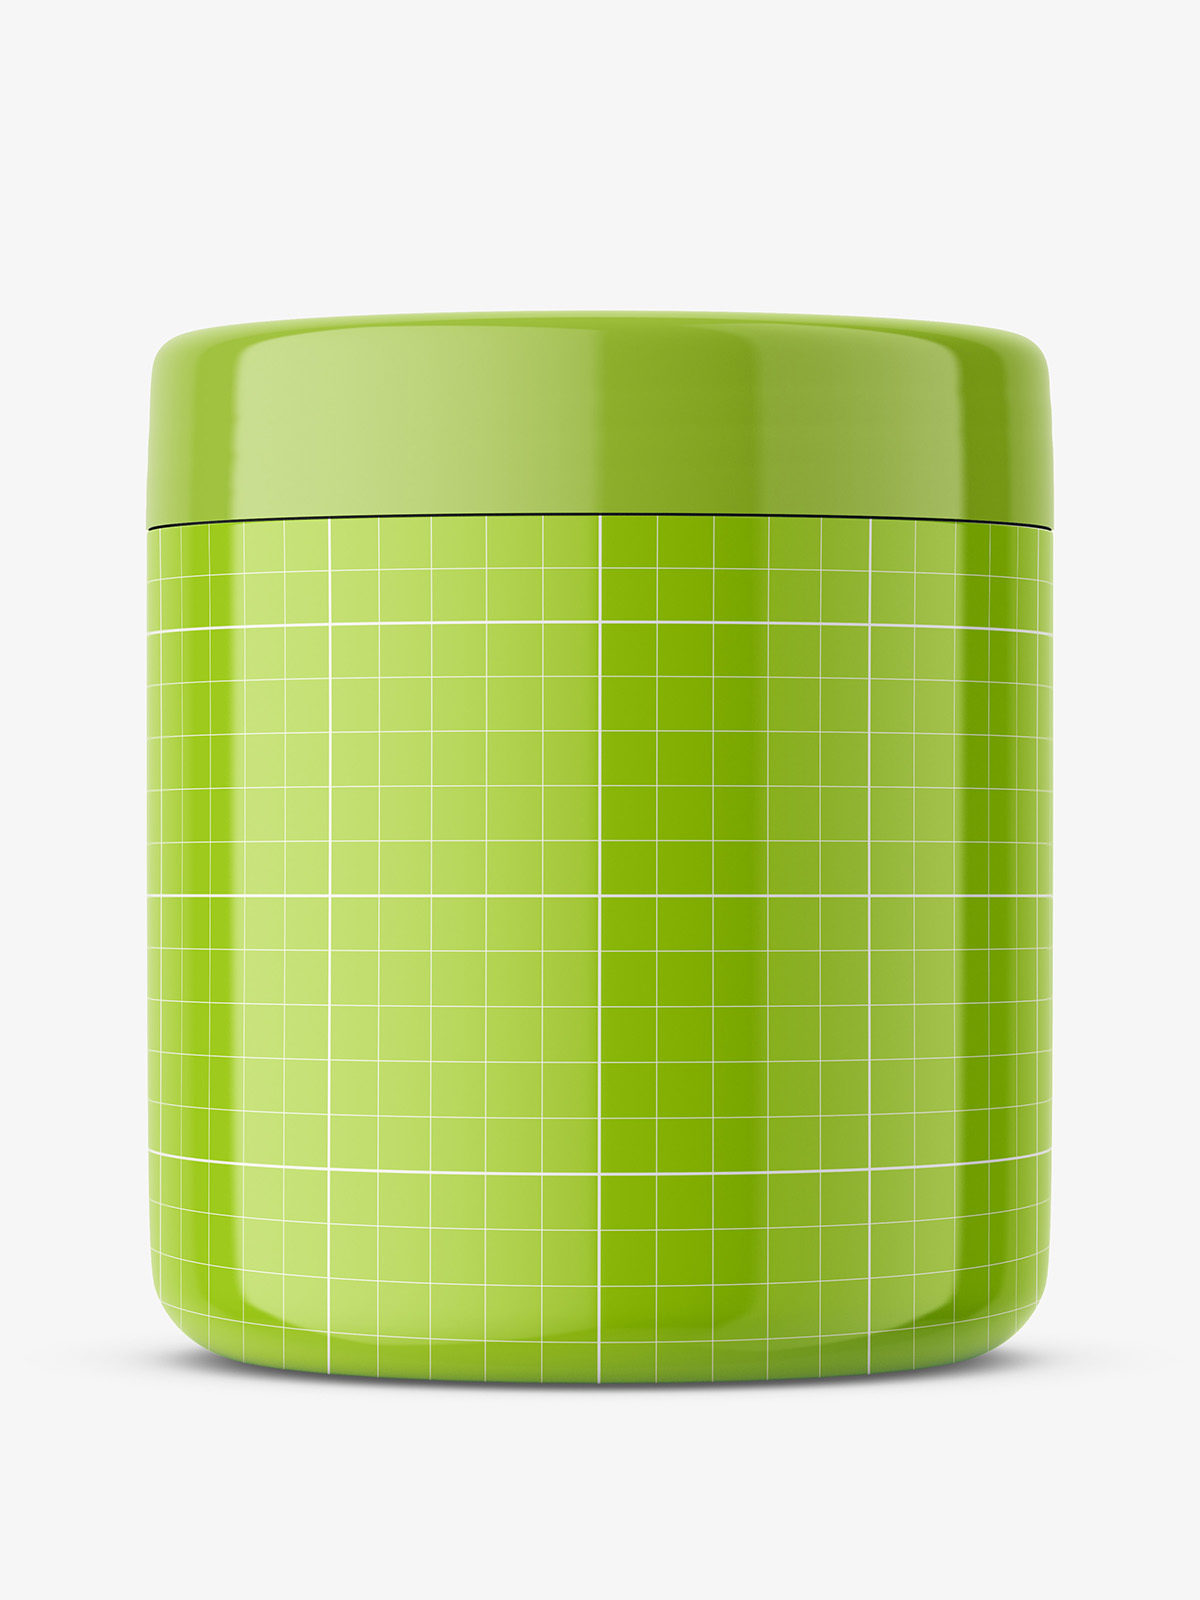 Download Glossy Cosmetic Jar Mockup Smarty Mockups